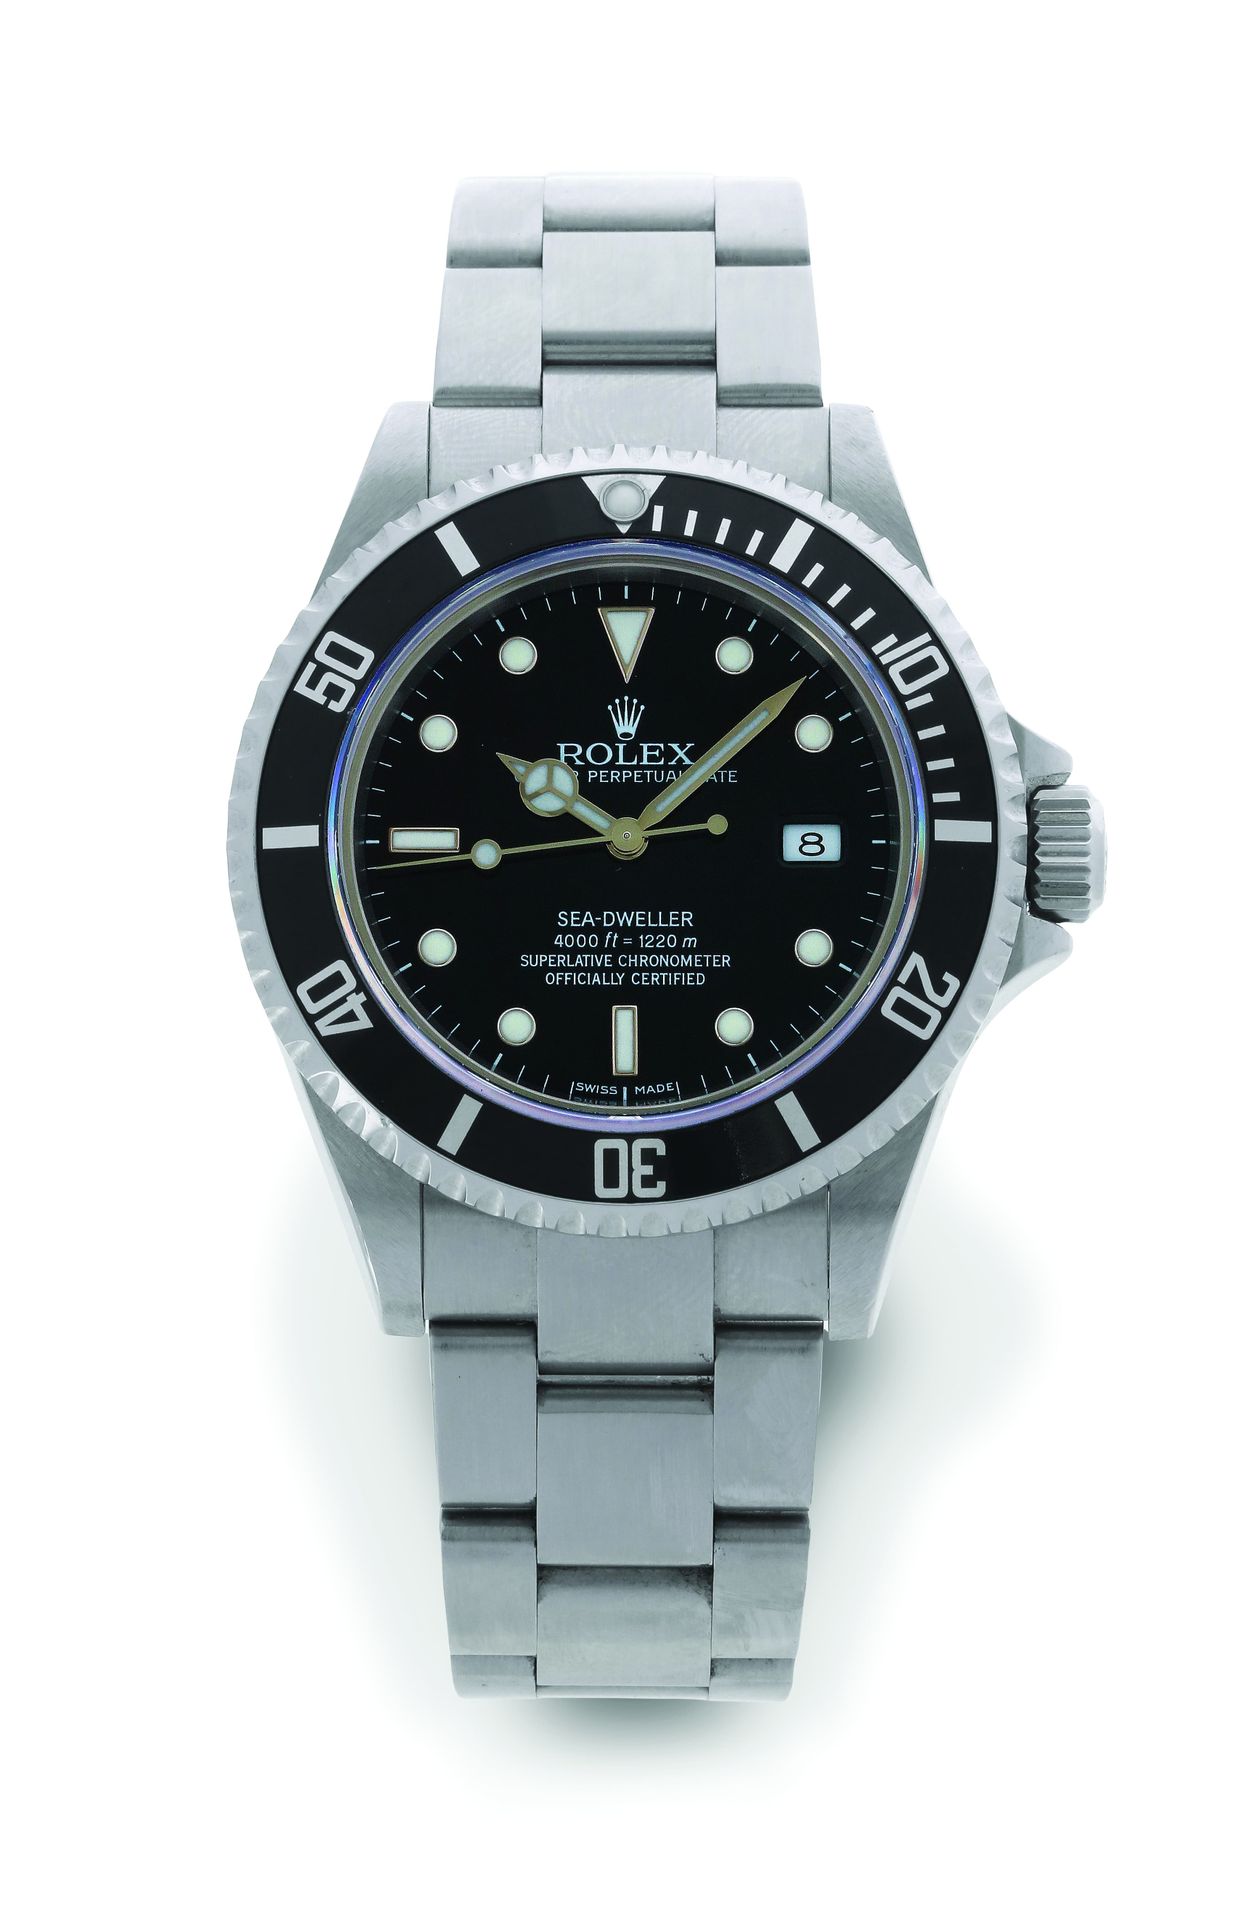 ROLEX Oyster Perpetual Sea-Dweller
Referencia 16600T
Reloj de submarinismo de ac&hellip;